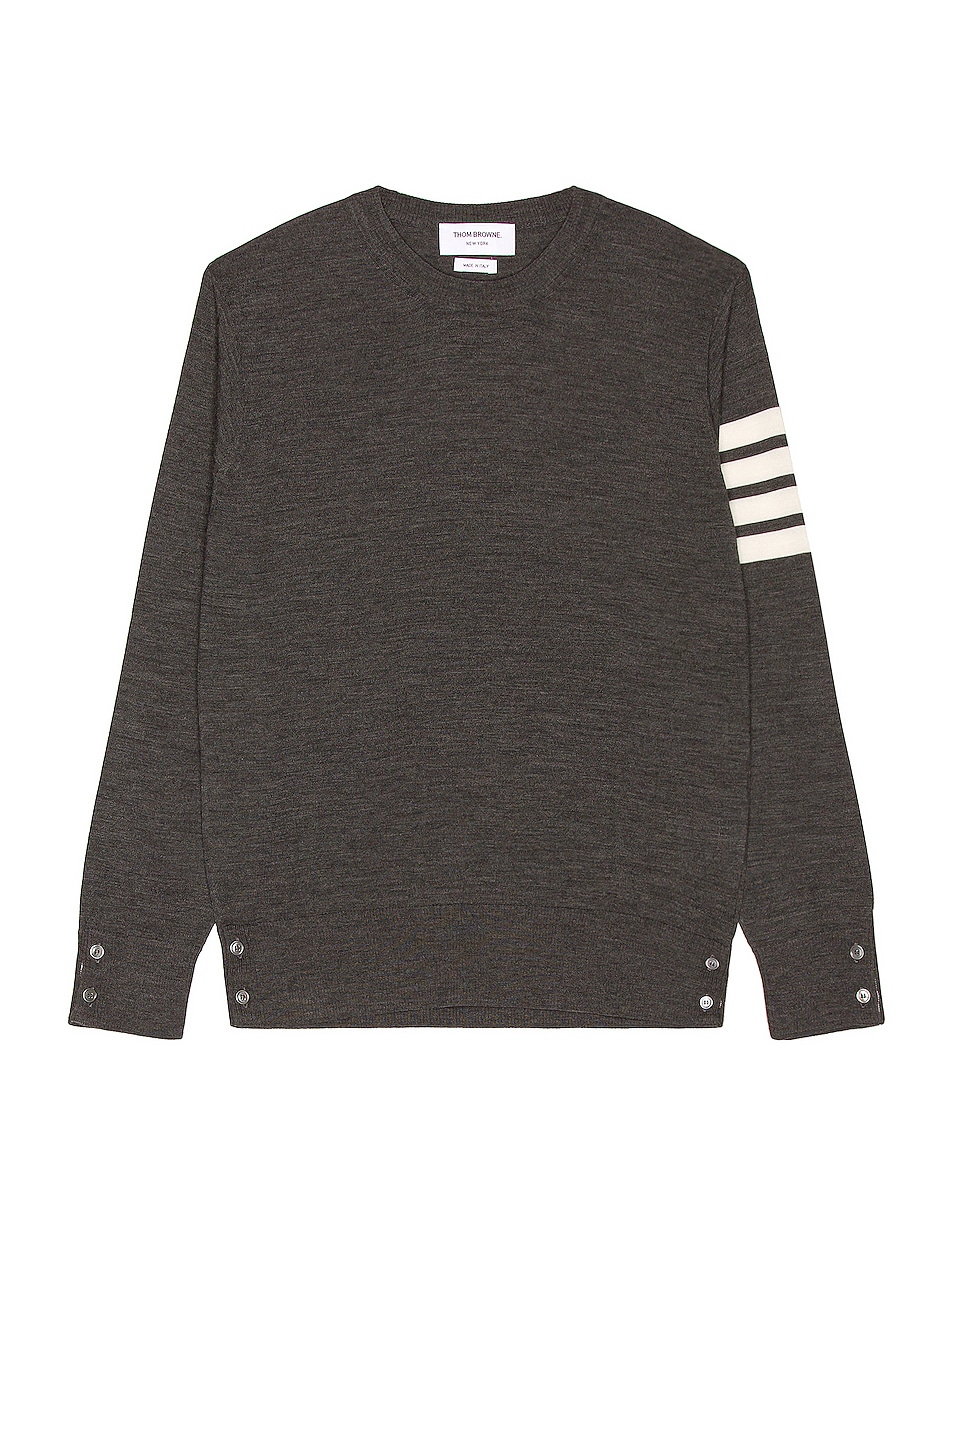 Image 1 of Thom Browne Sustainable Merino Classic Crew Sweater in Dark Grey